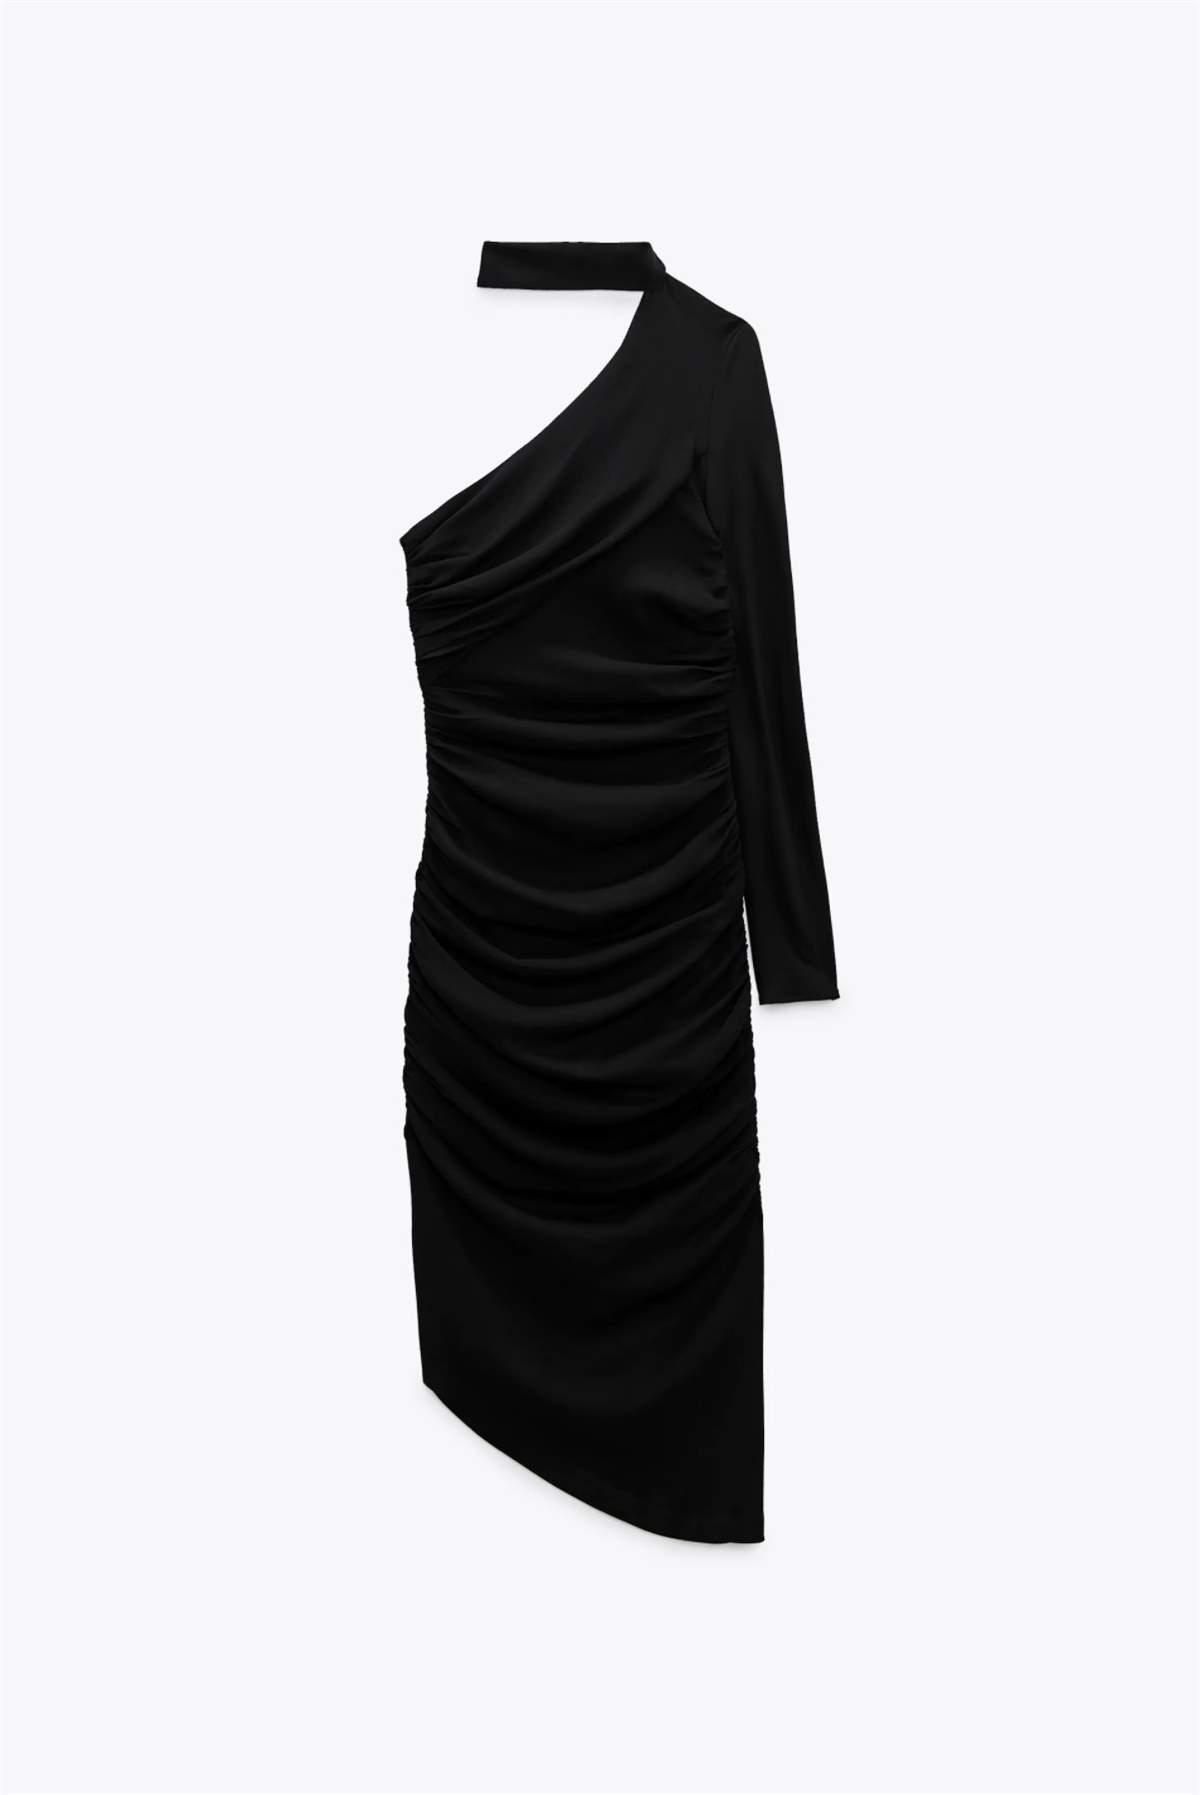 Vestido negro asimétrico